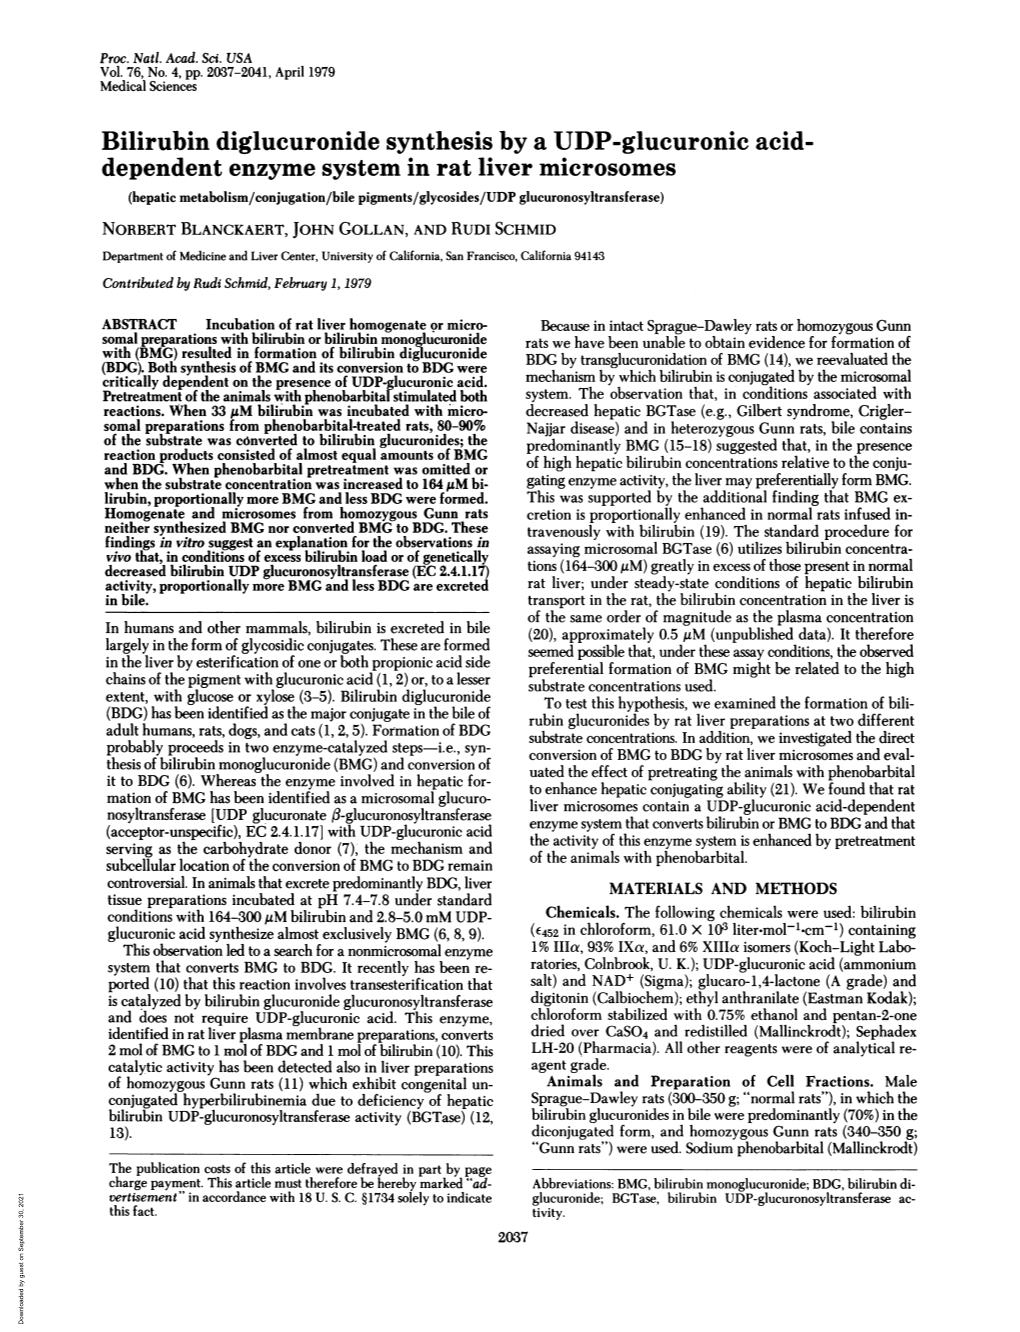 Bilirubin Diglucuronide Synthesis by a UDP-Glucuronic Acid